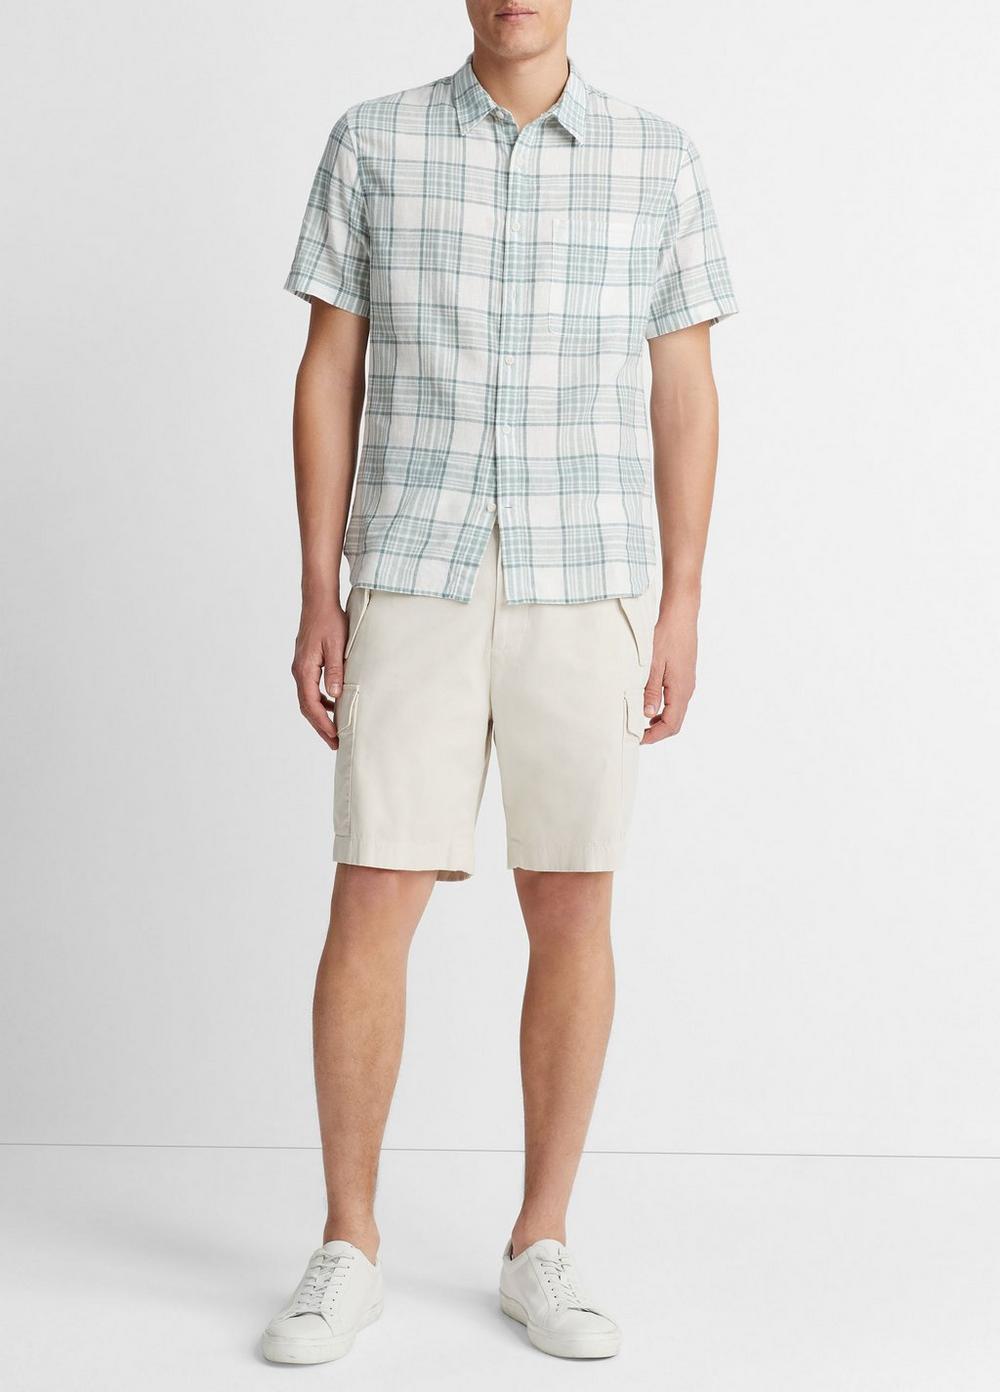 Kino Plaid Linen-cotton Short-Sleeve Shirt, Mirage Teal/optic White, Size XL Vince